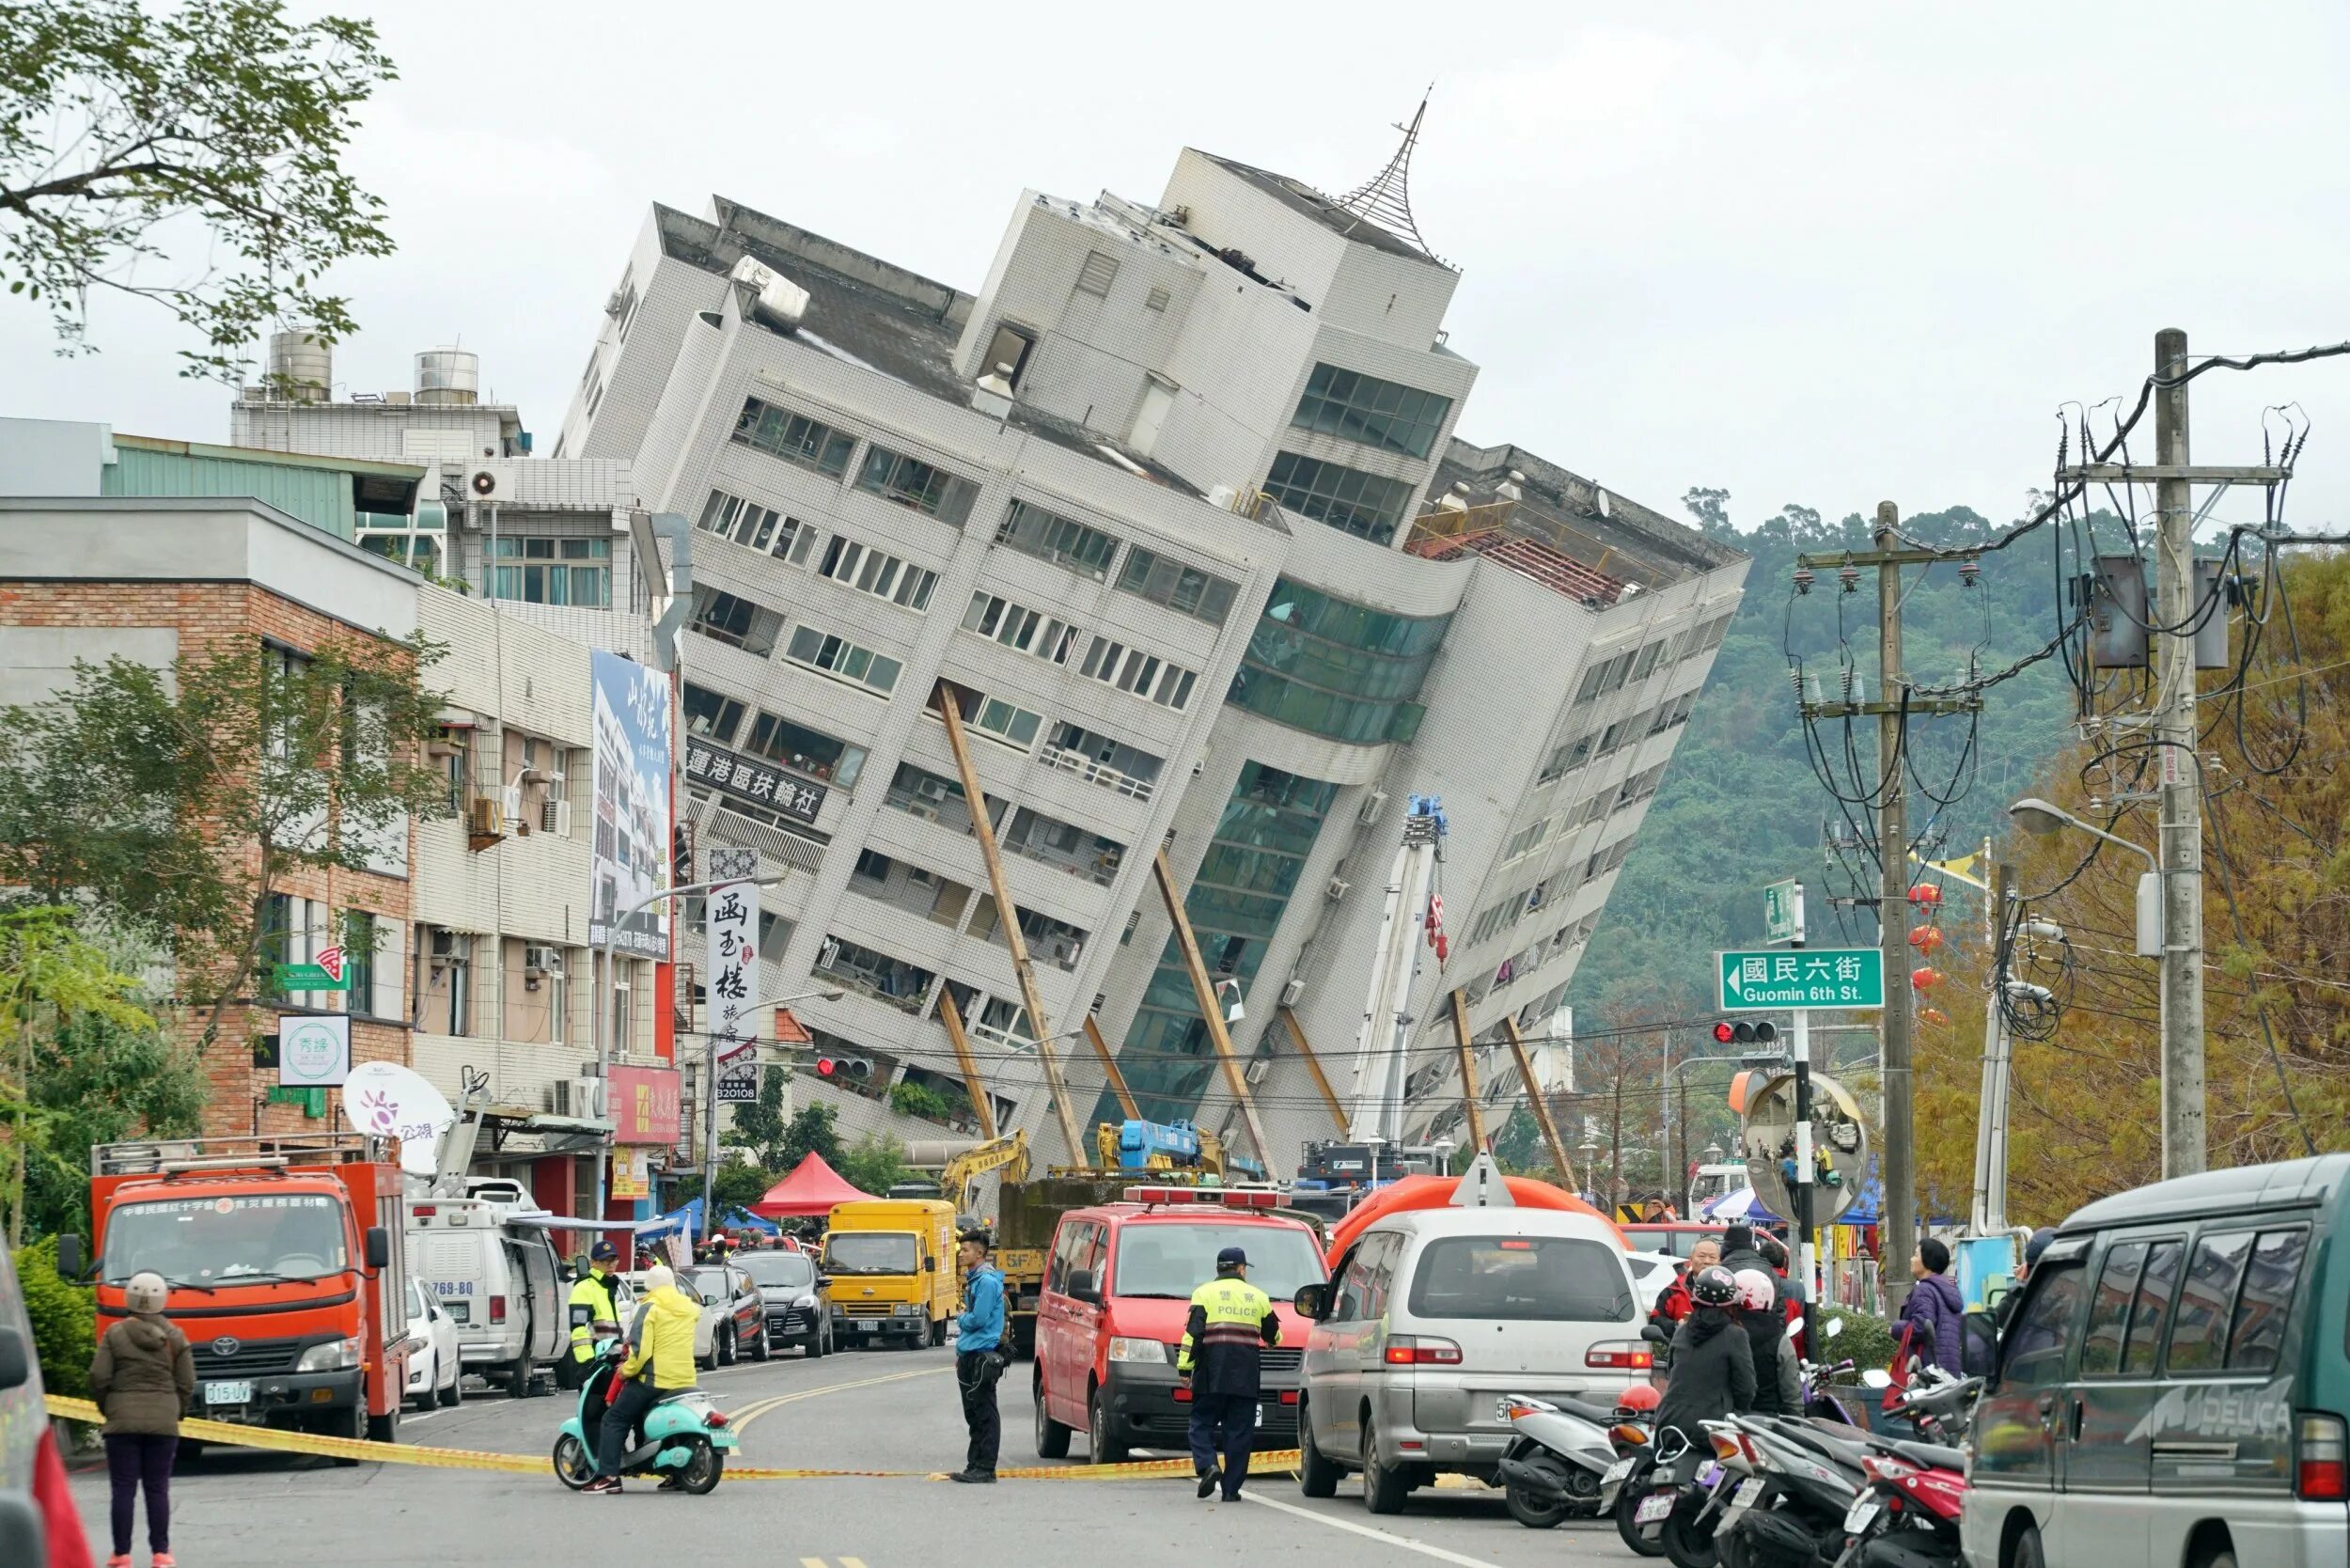 Землетрясение tsmc. Землетрясение Хуалянь. Гостиница Маршал Тайвань землетрясение. Тайвань землетрясение 2018. Землетрясение на Тайване 1999.